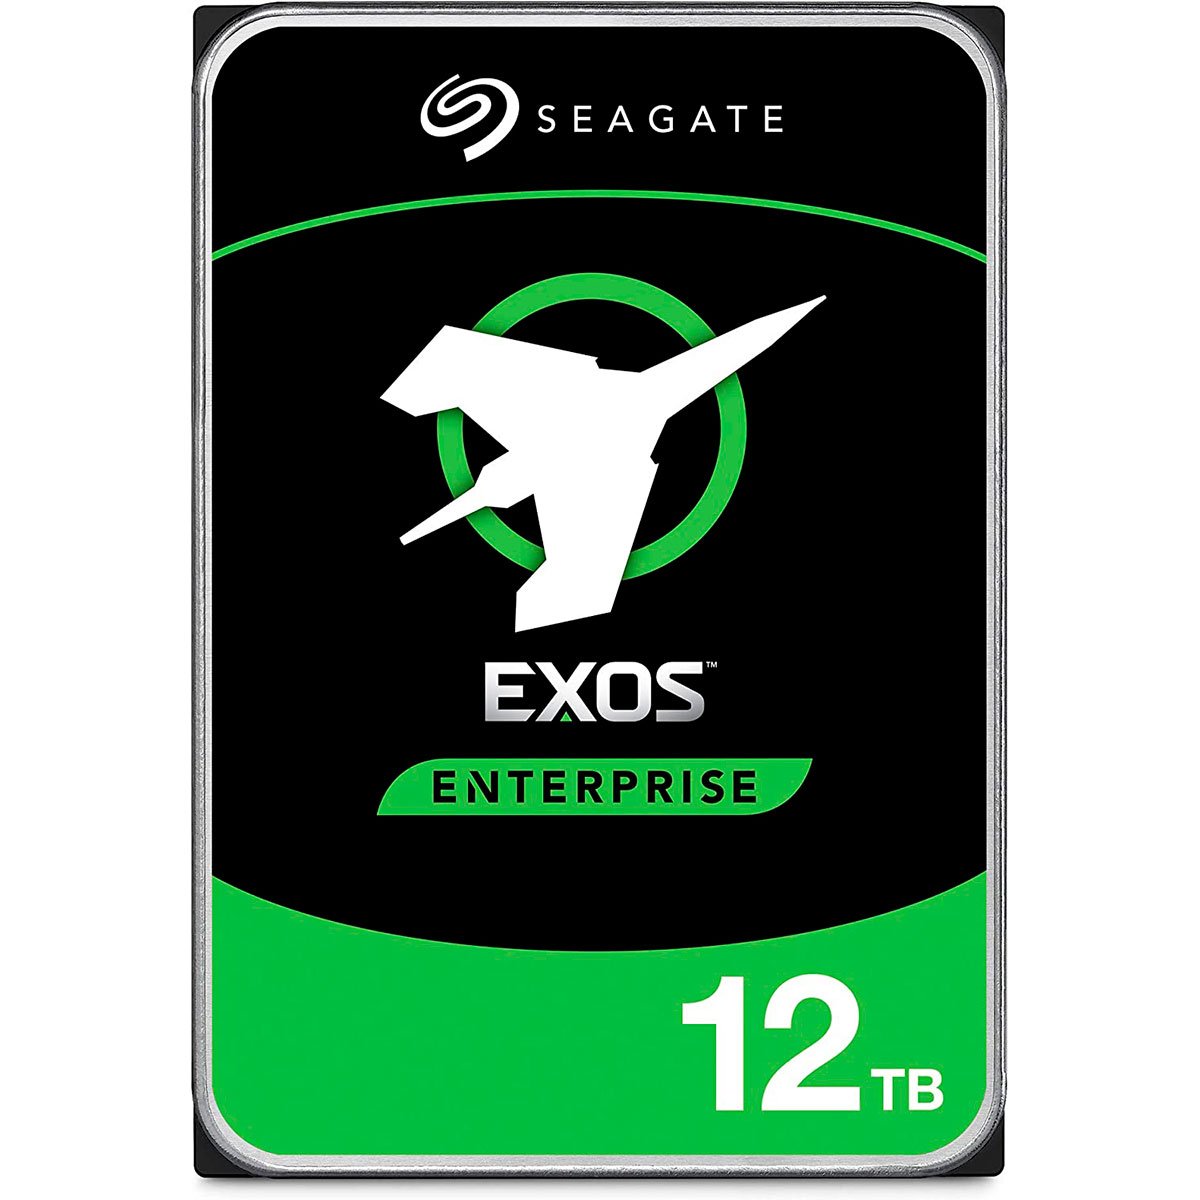 HD SAS 12TB - 7200RPM - 256MB Cache - Seagate Exos X16 Enterprise - ST12000NM002G